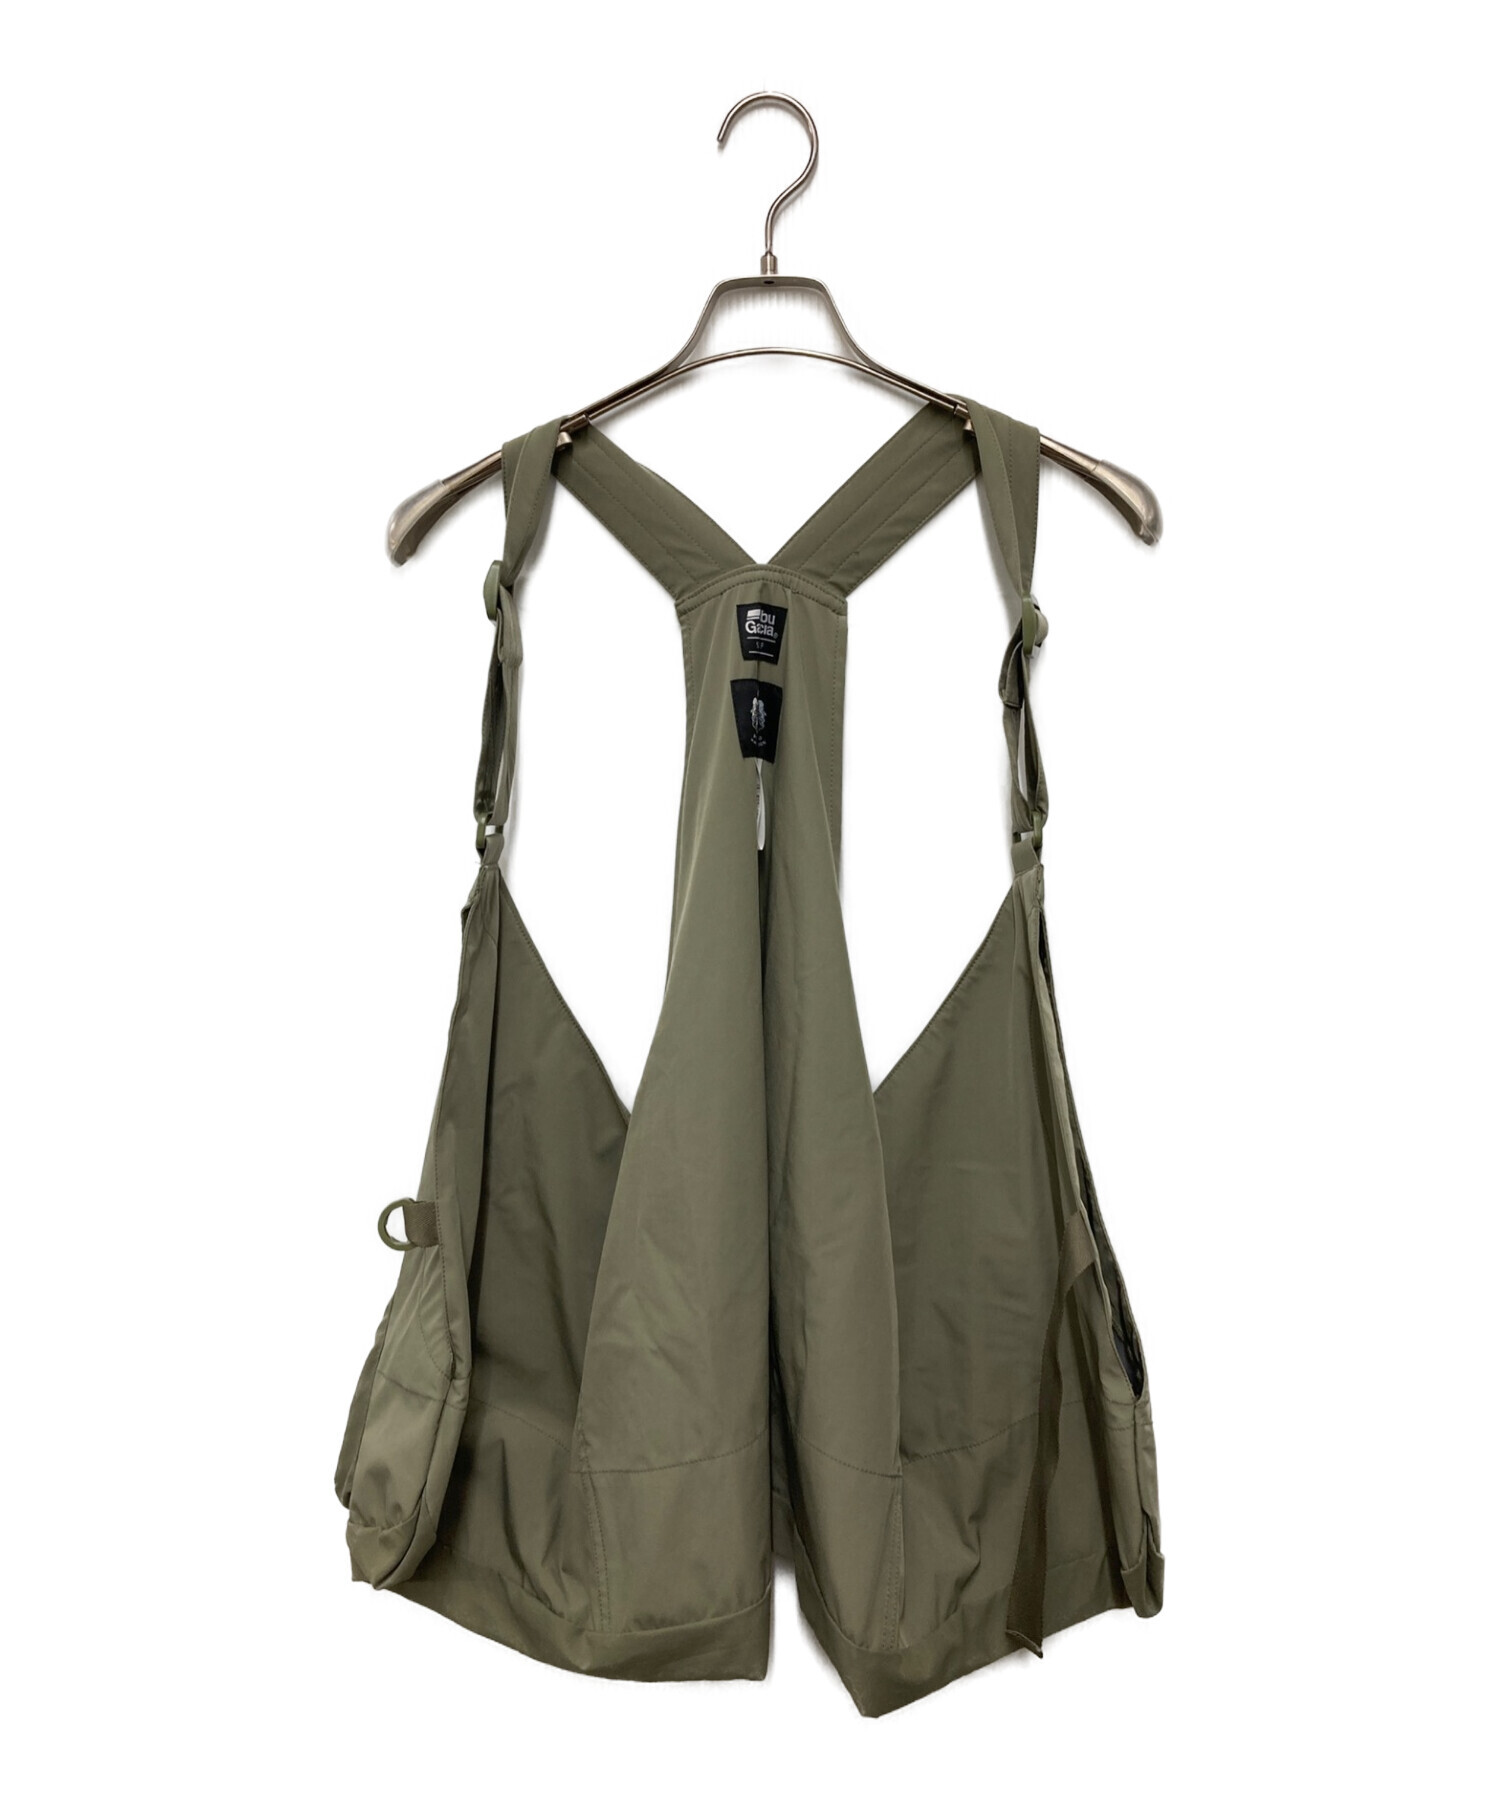 Abu Garcia×BEAMS (アブガルシア×ビームス) 別注 Fishing Vest フィッシングベスト カーキ サイズ:Free